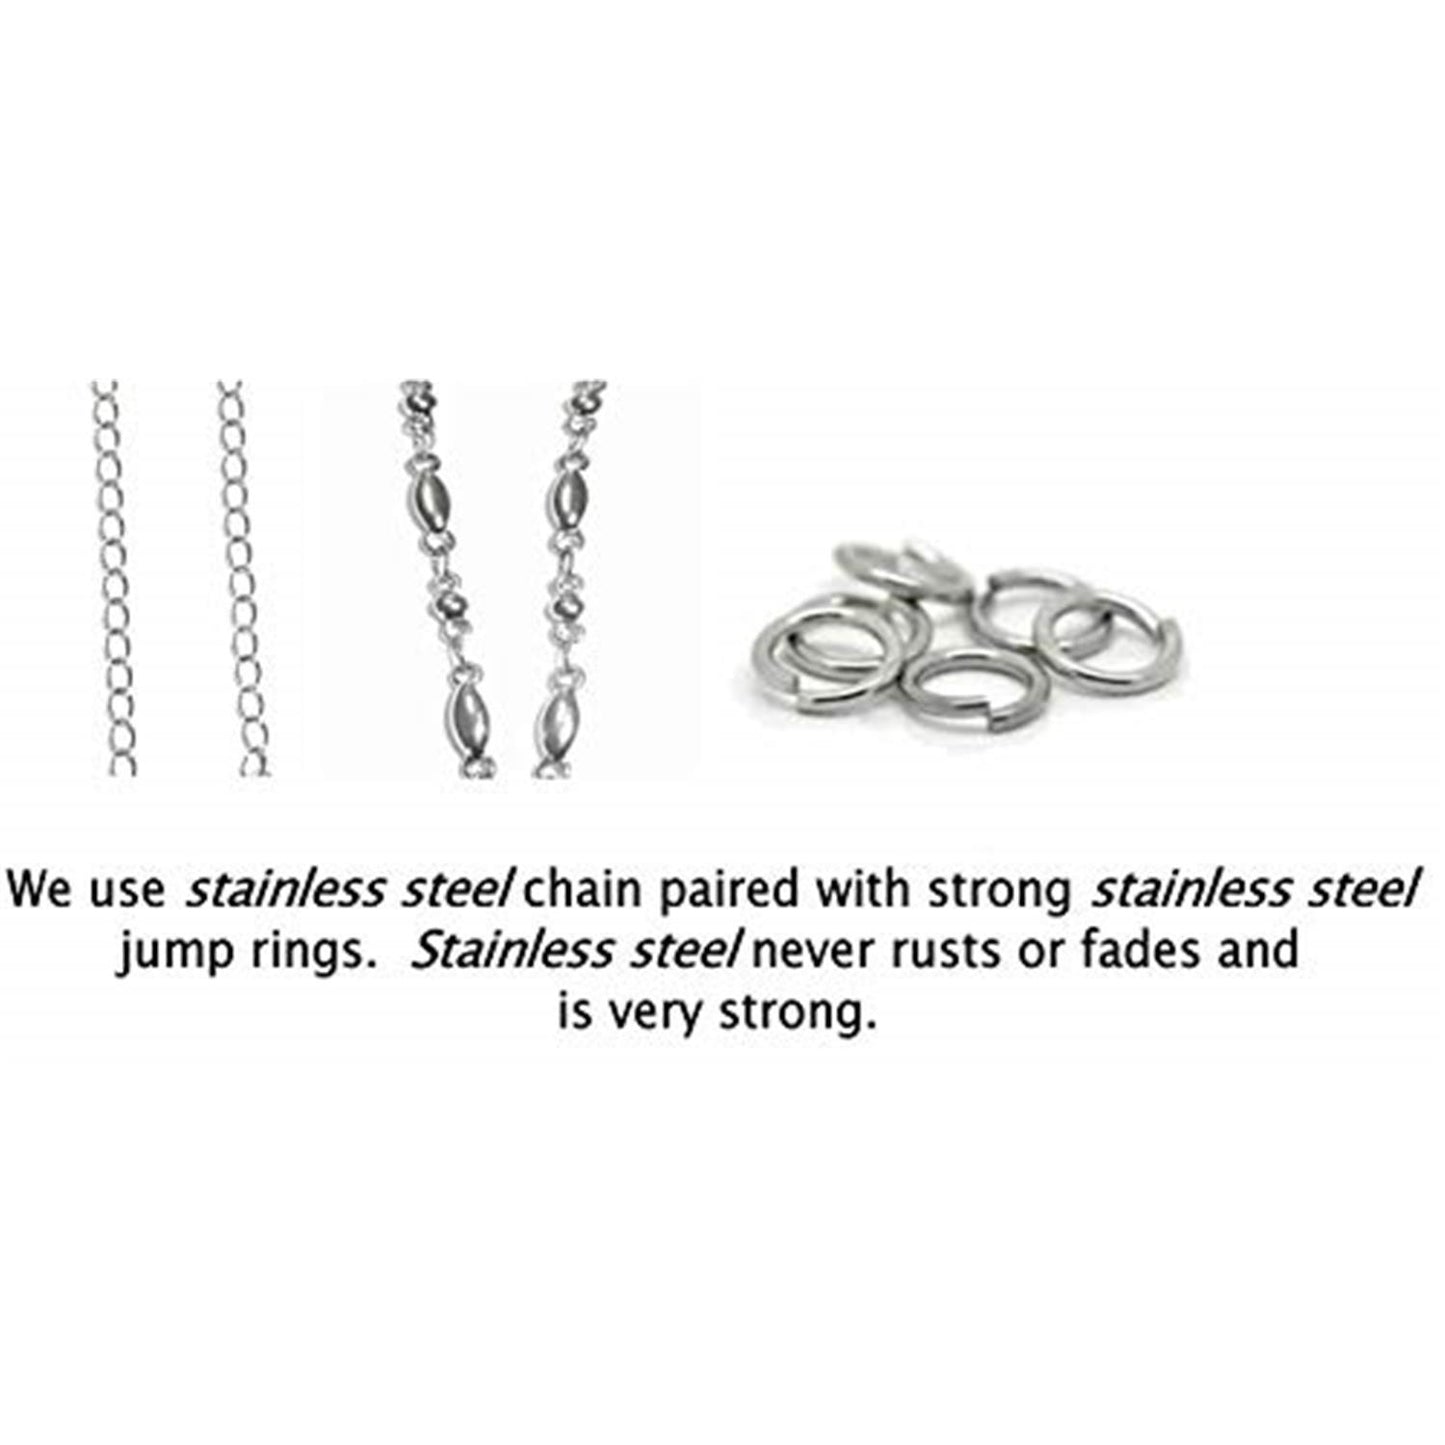 Looks Like Hematite Jewelry! Women's Fashion Necklace Lanyard, 36" Long - Magnetic Breakaway Style